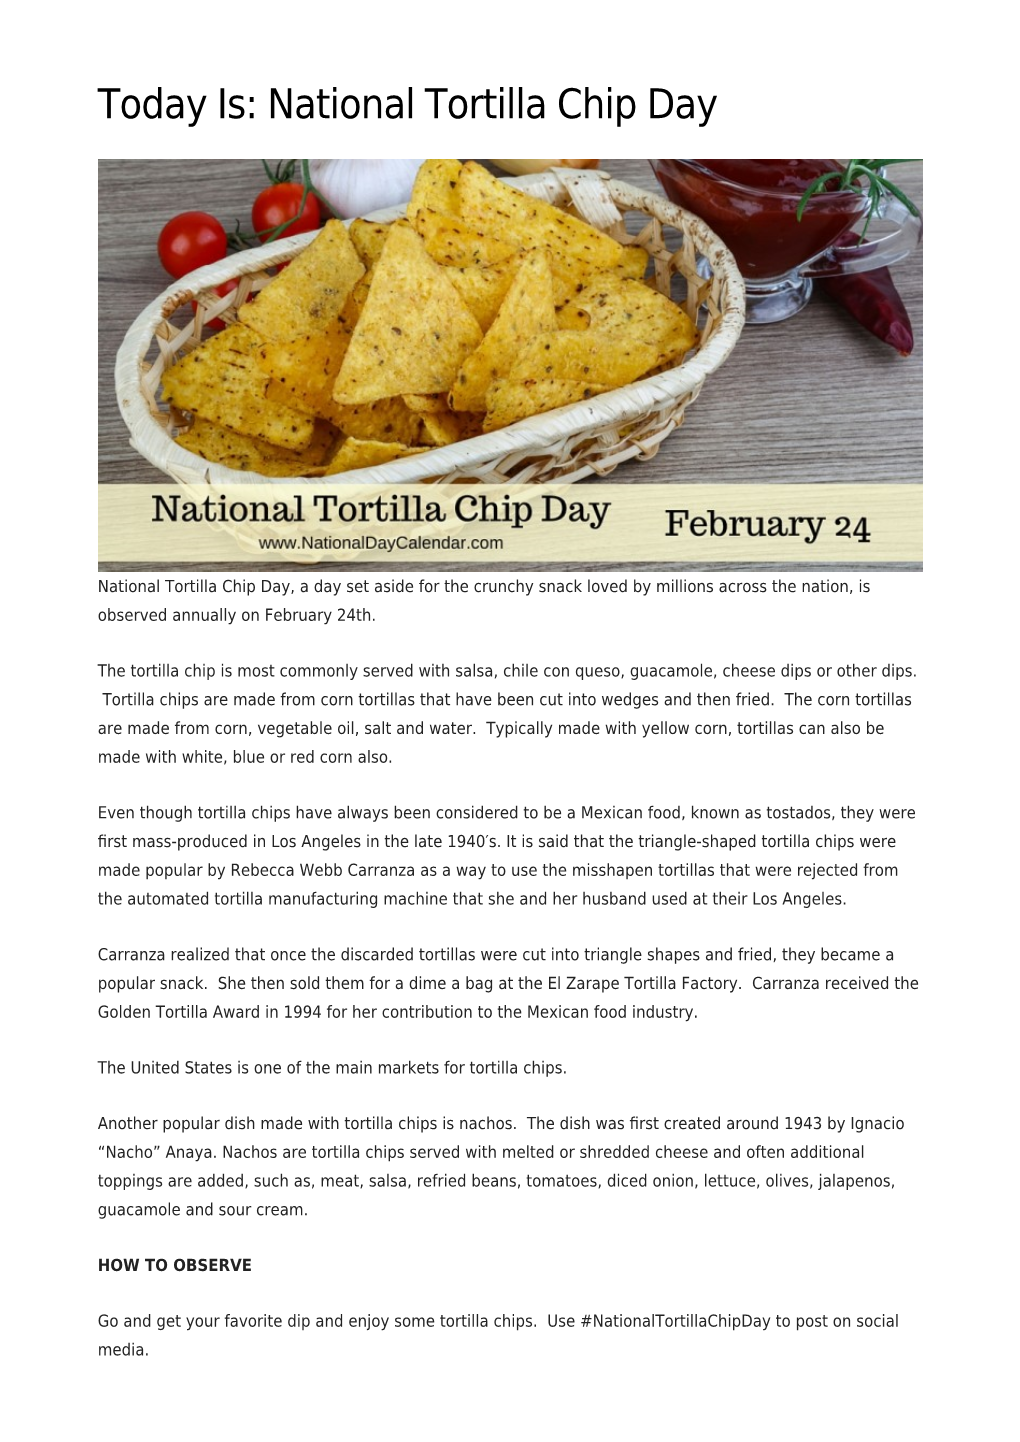 National Tortilla Chip Day